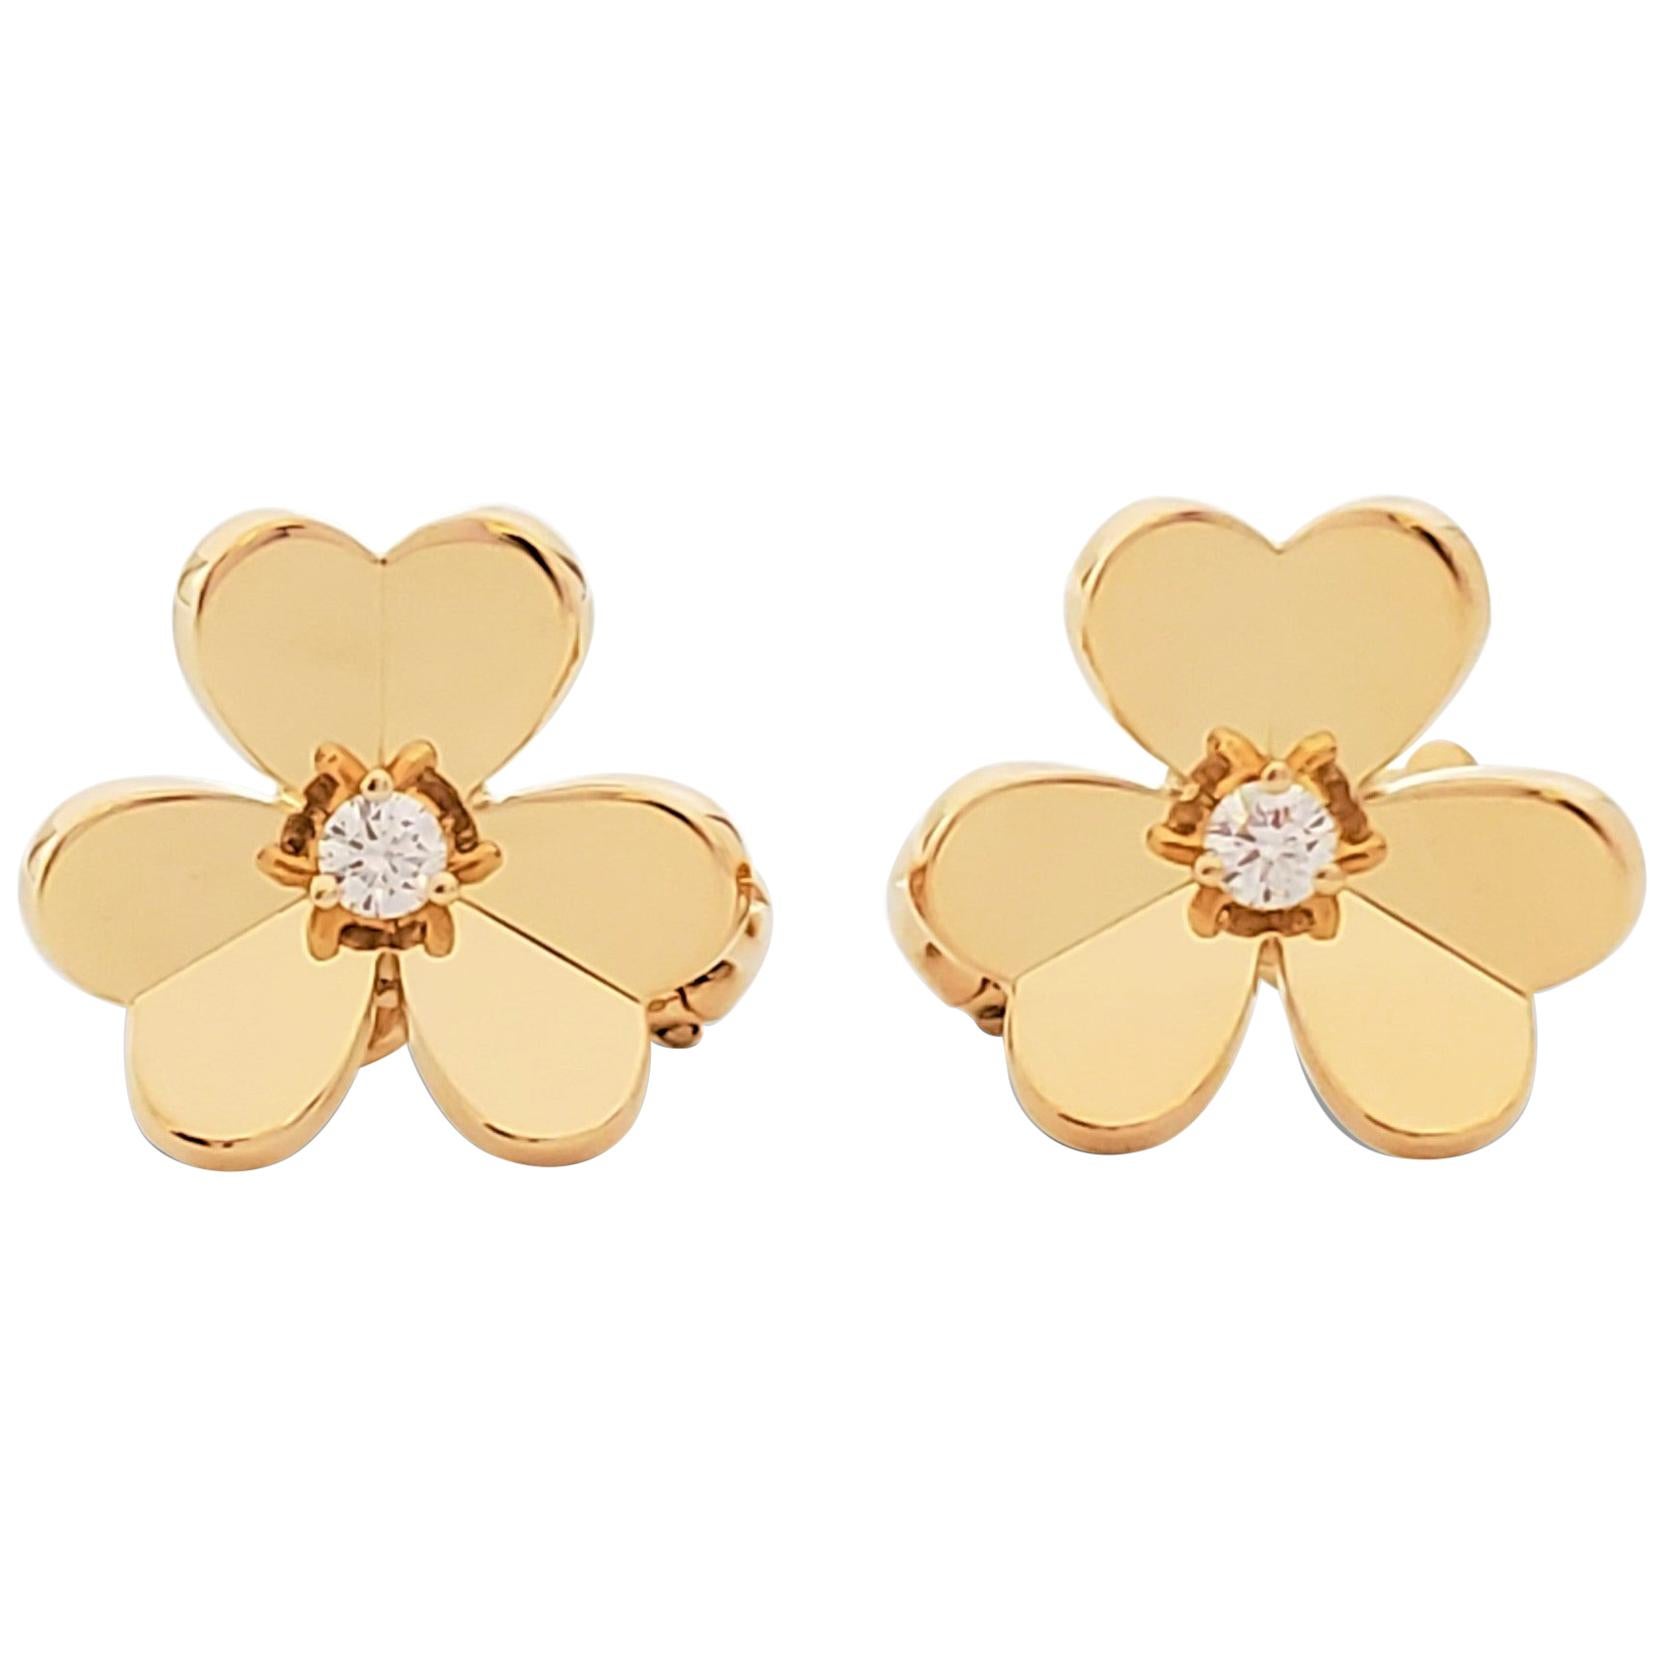 Van Cleef & Arpels 'Frivole' Yellow Gold and Diamonds Earrings, Small Model